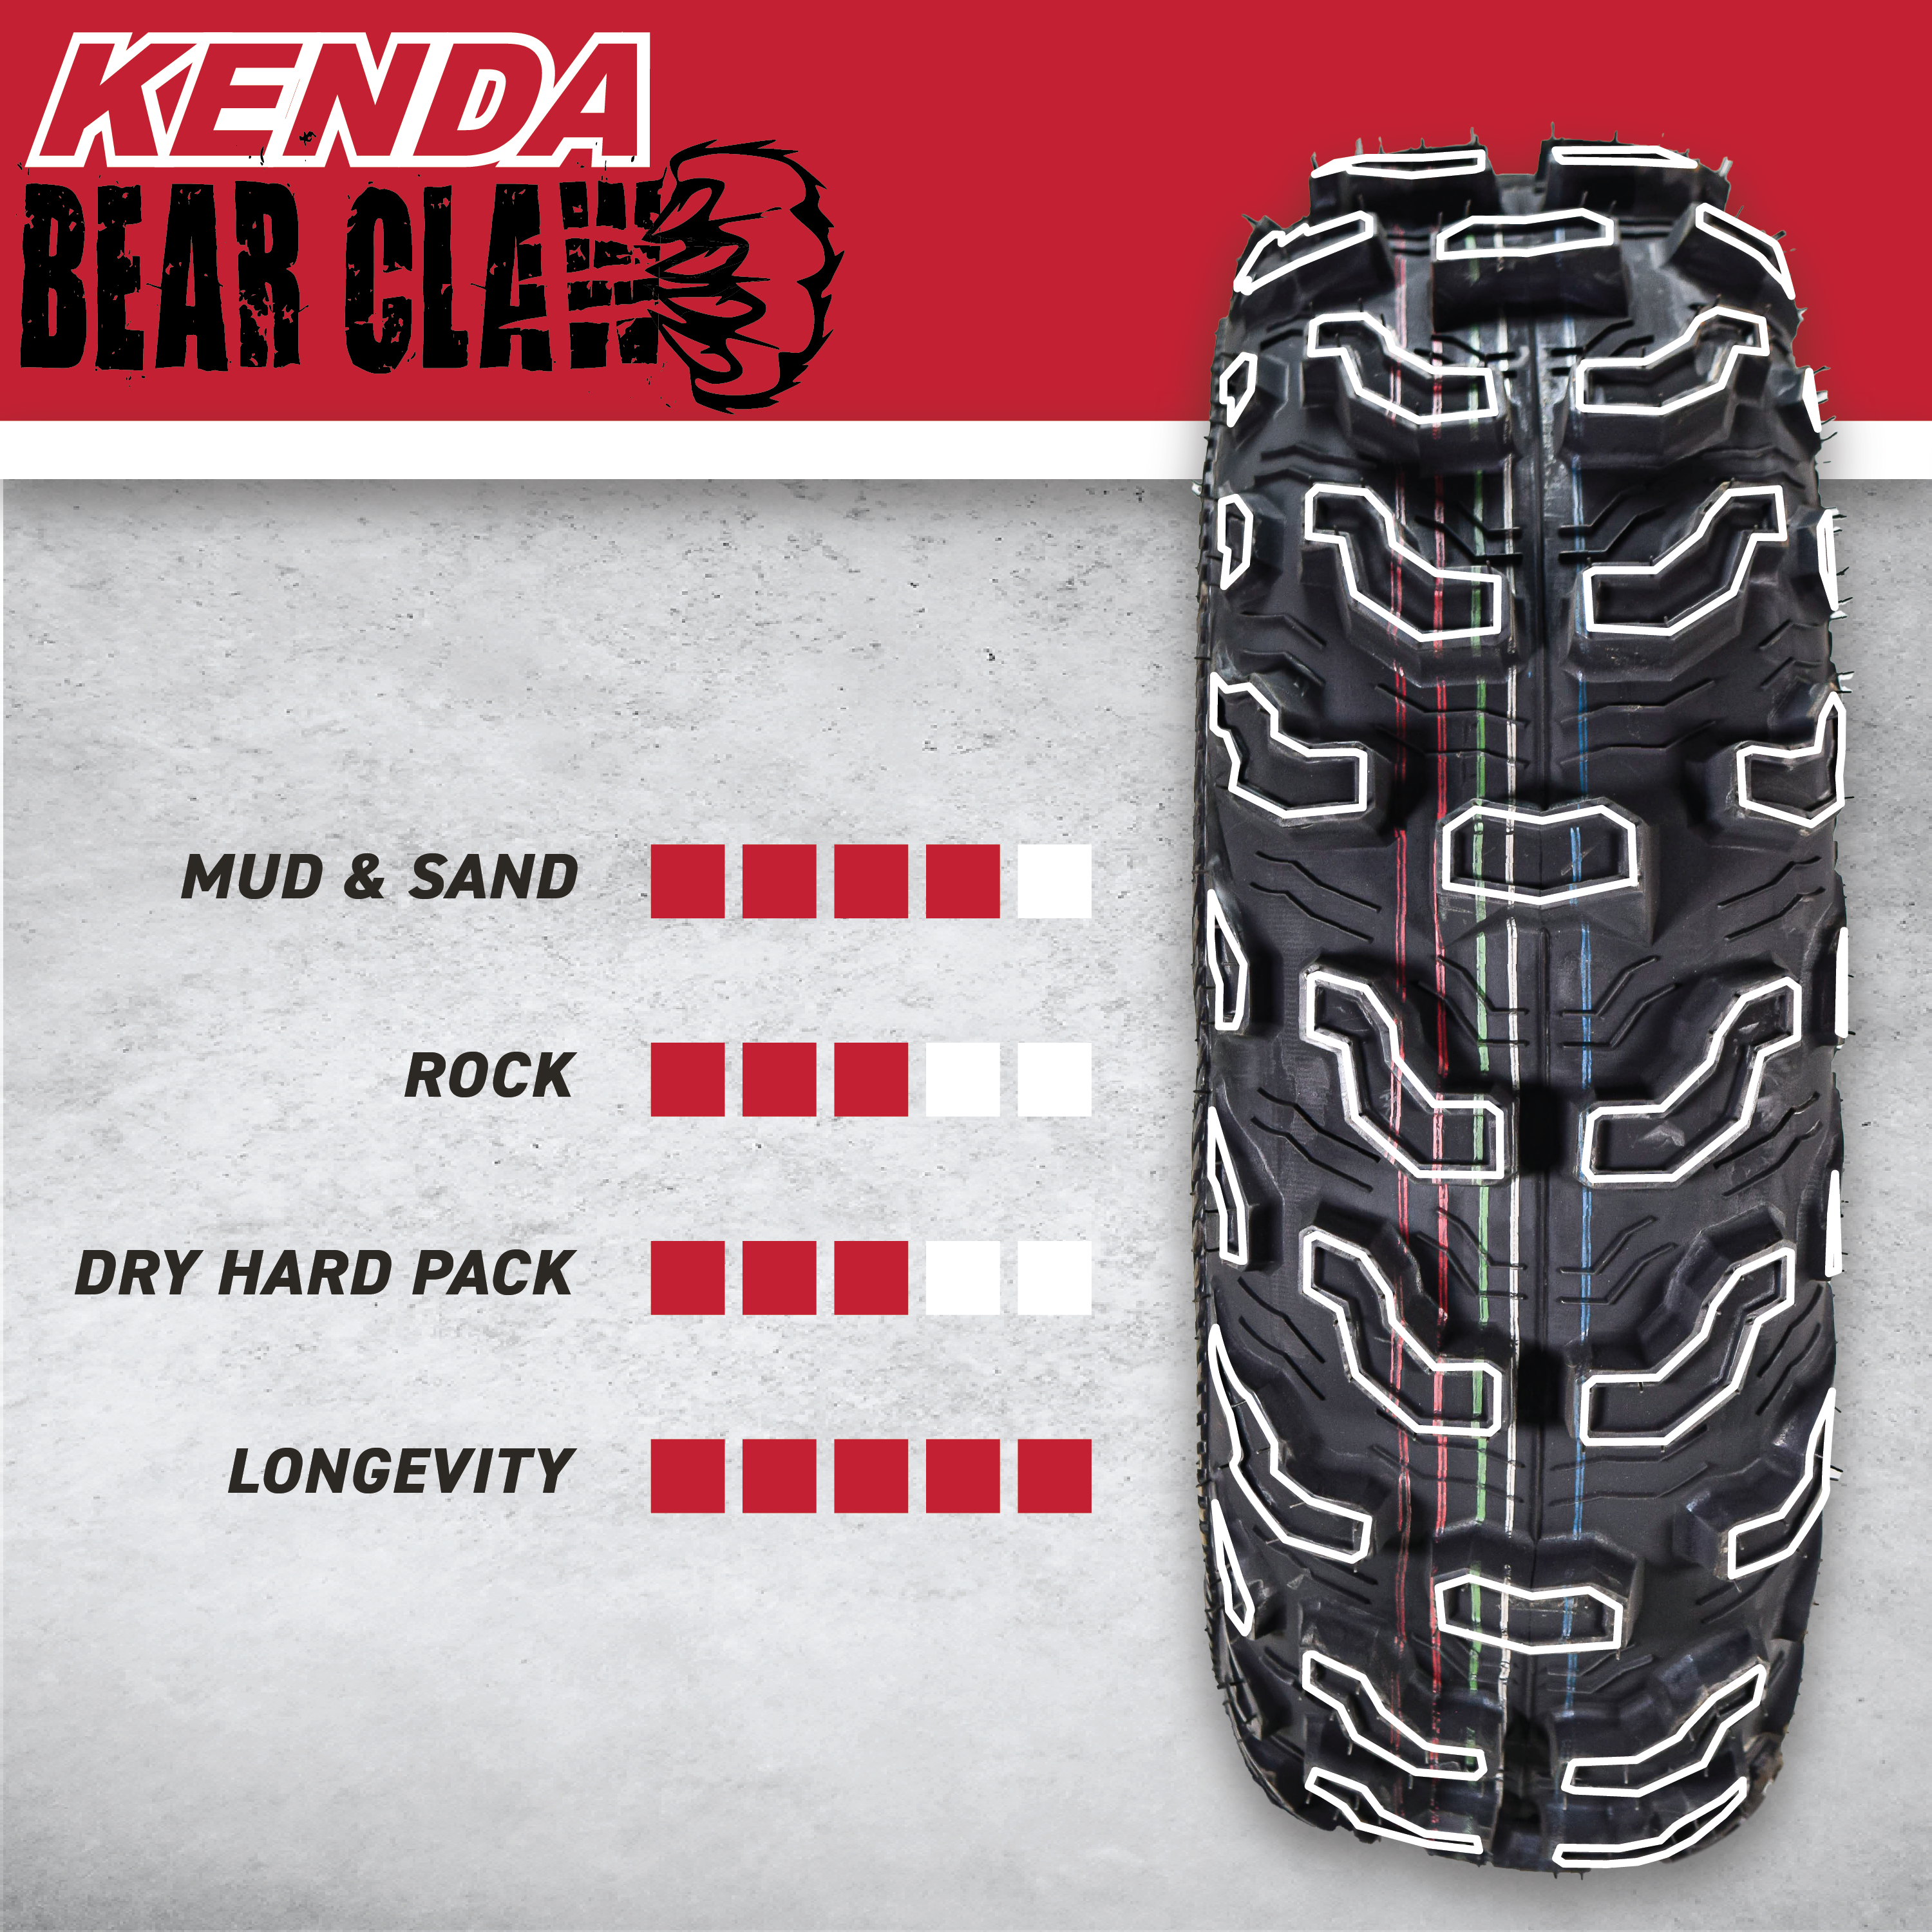 Kenda Bear Claw EX 25x11-10 Rear ATV 6 PLY Tires Bearclaw 25x11x10 - 2 Pack